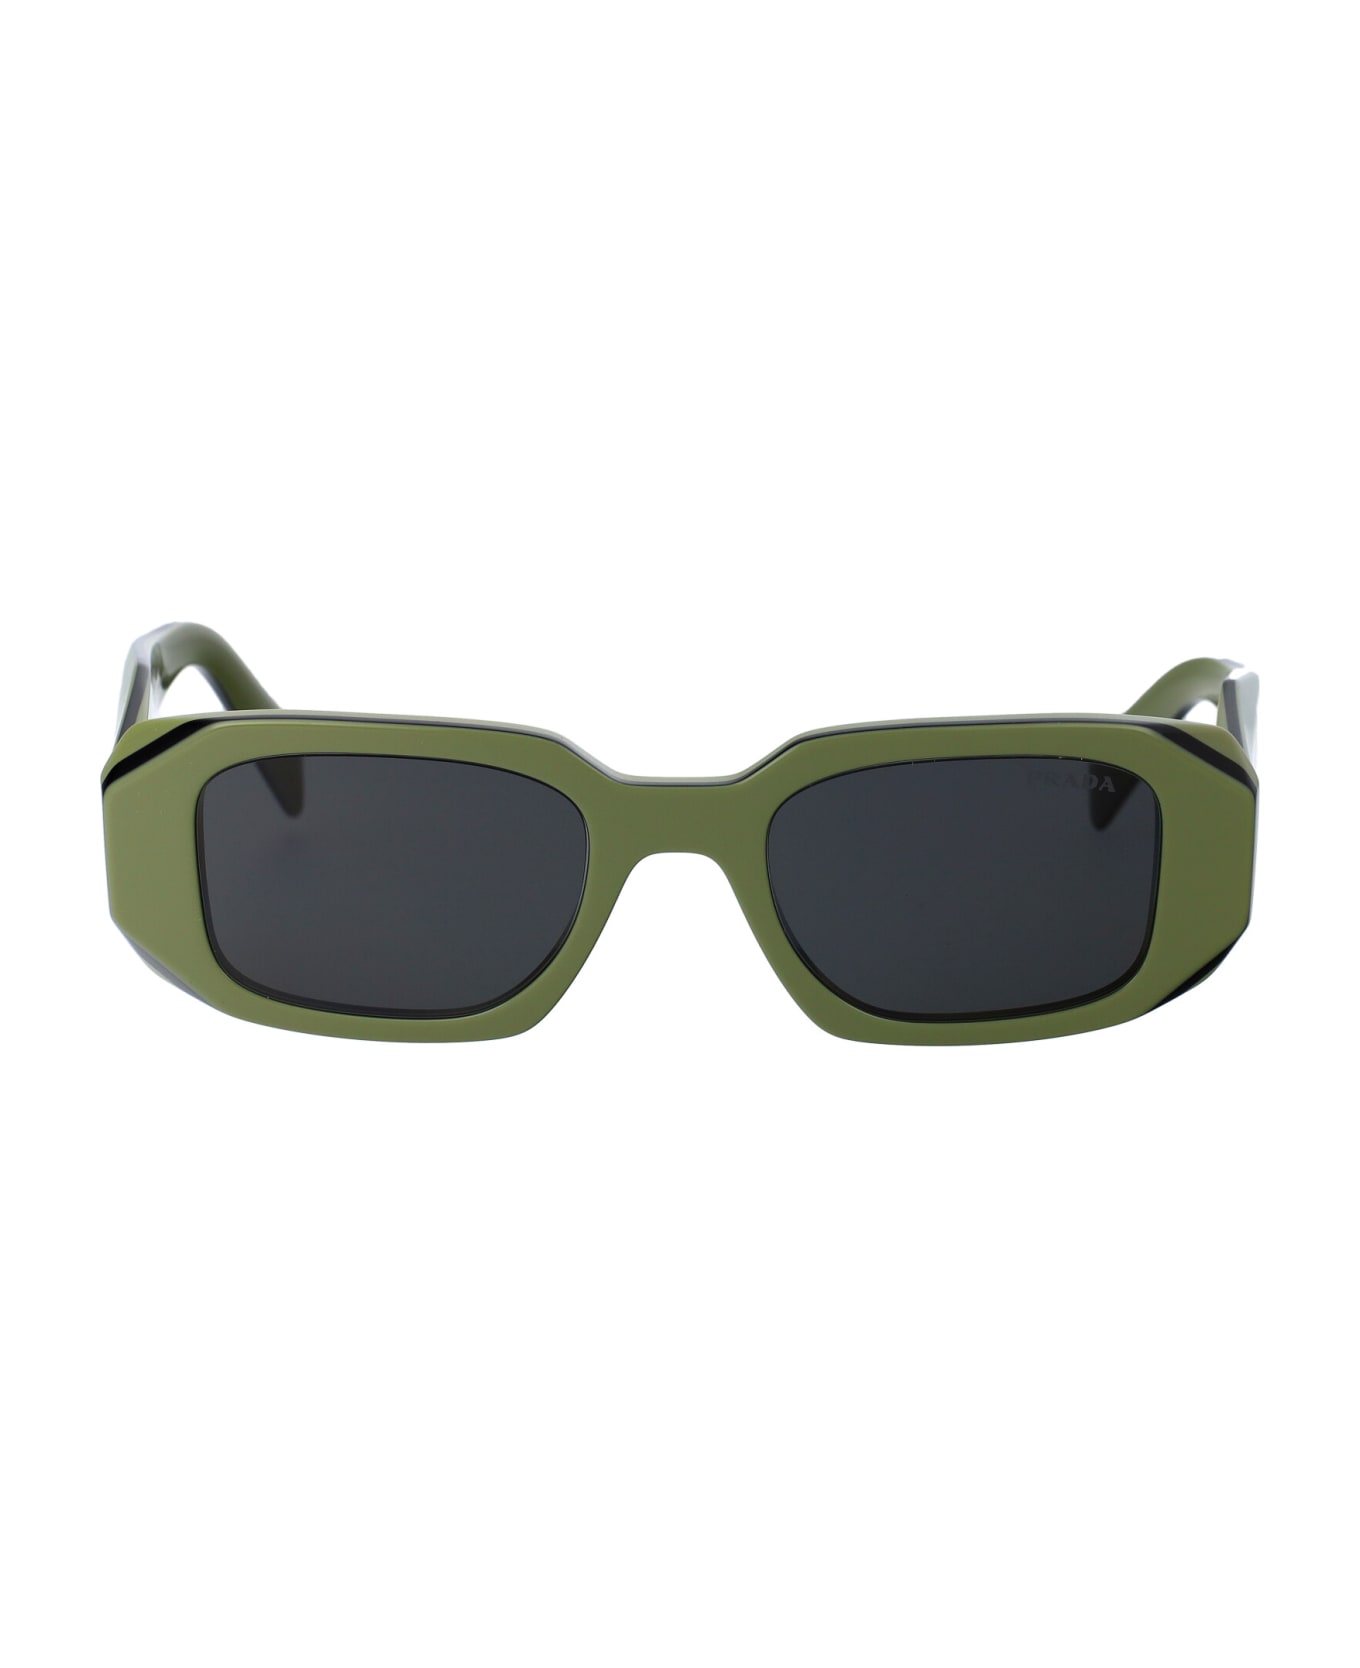 Prada Eyewear 0pr 17ws Sunglasses - 13N5S0 Sage/Black サングラス